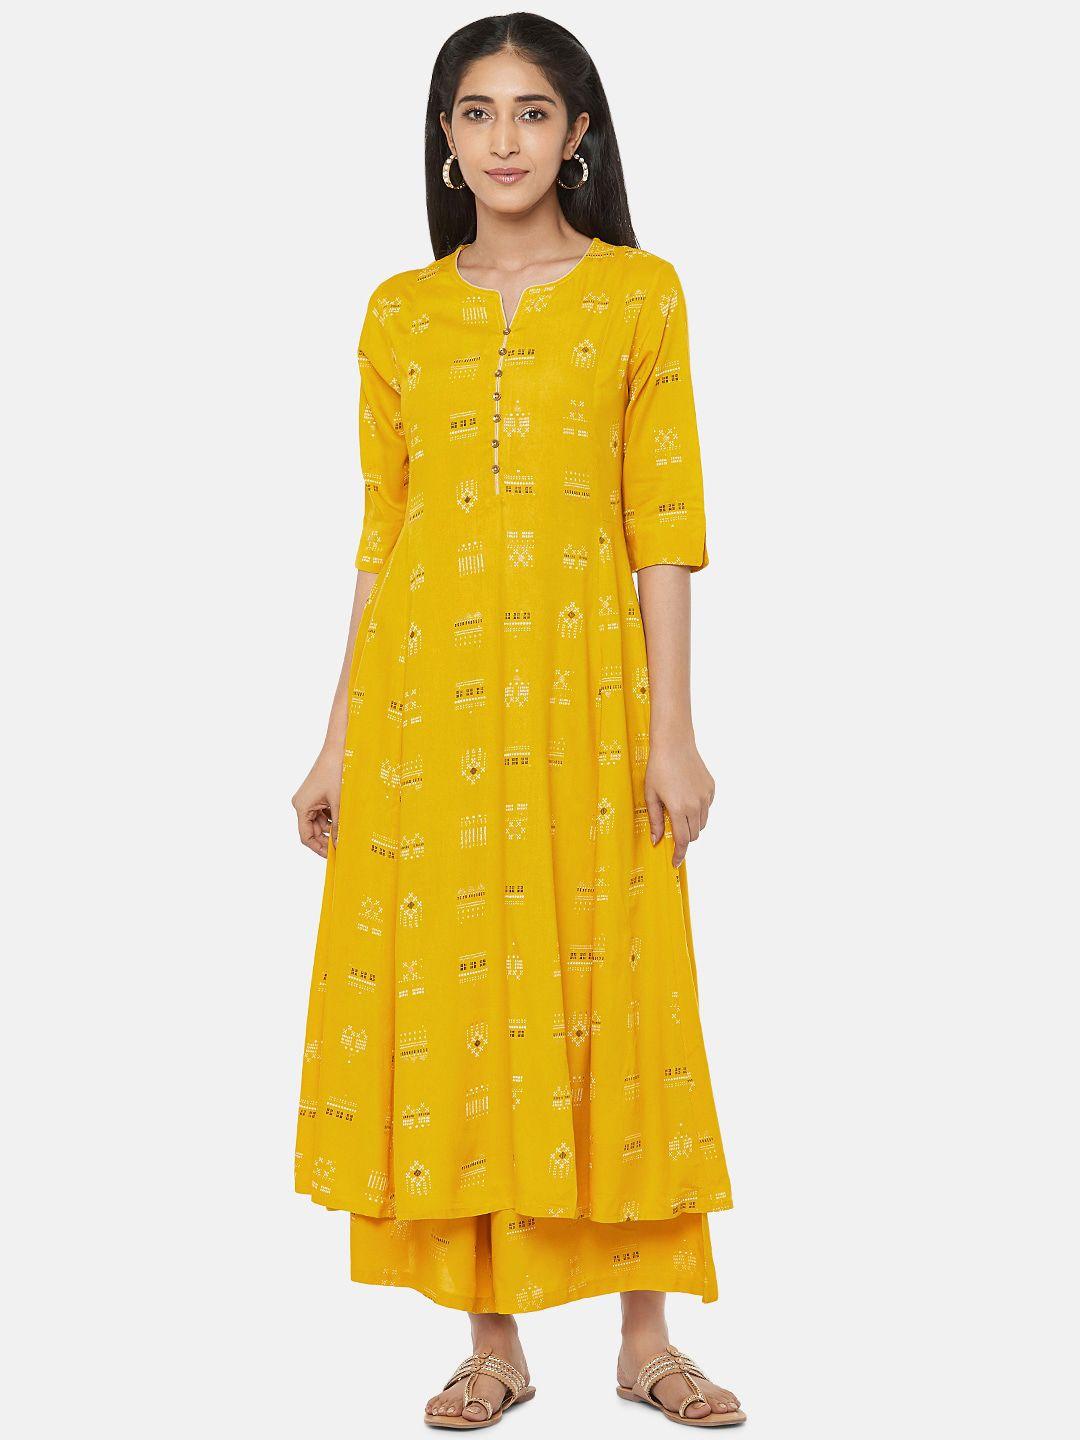 rangmanch by pantaloons women mustard yellow printed anarkali kurta